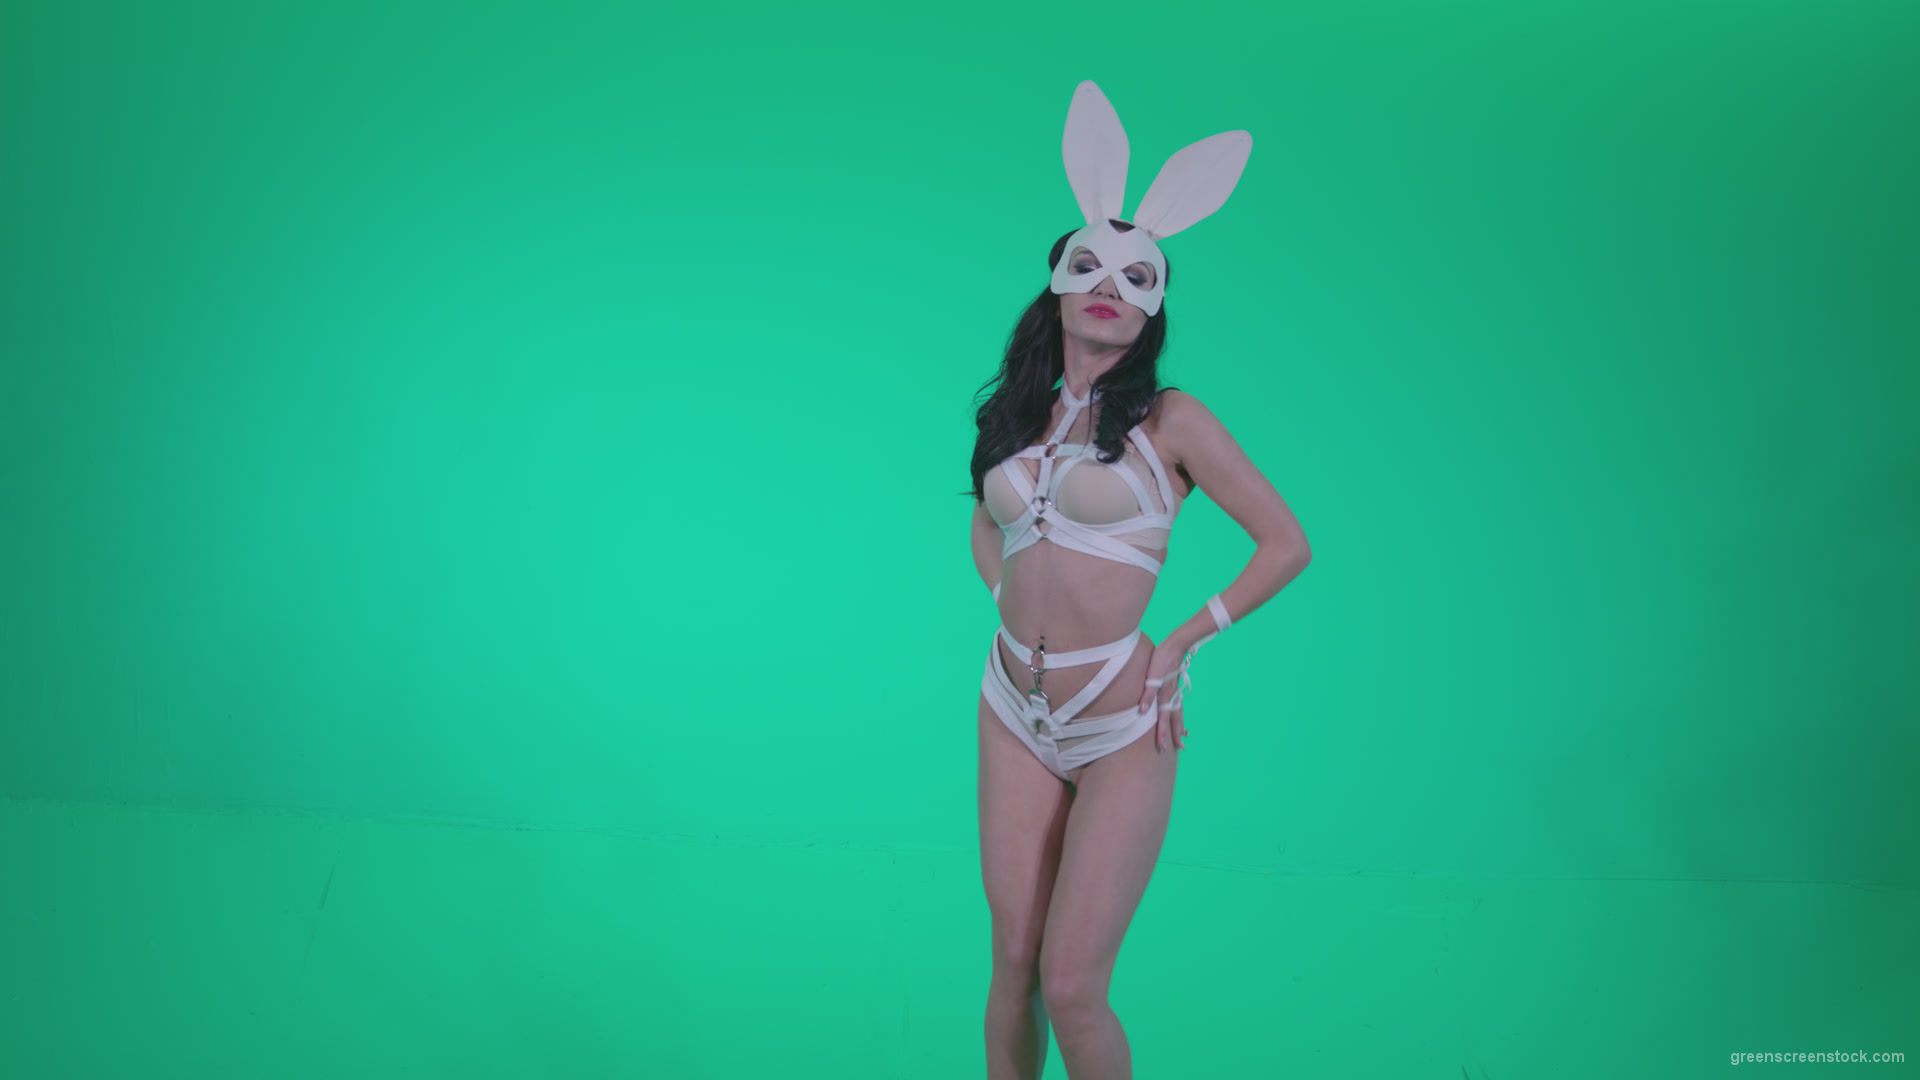 Go-go-Dancer-White-Rabbit-m9-Green-Screen-Video-Footage_001 Green Screen Stock